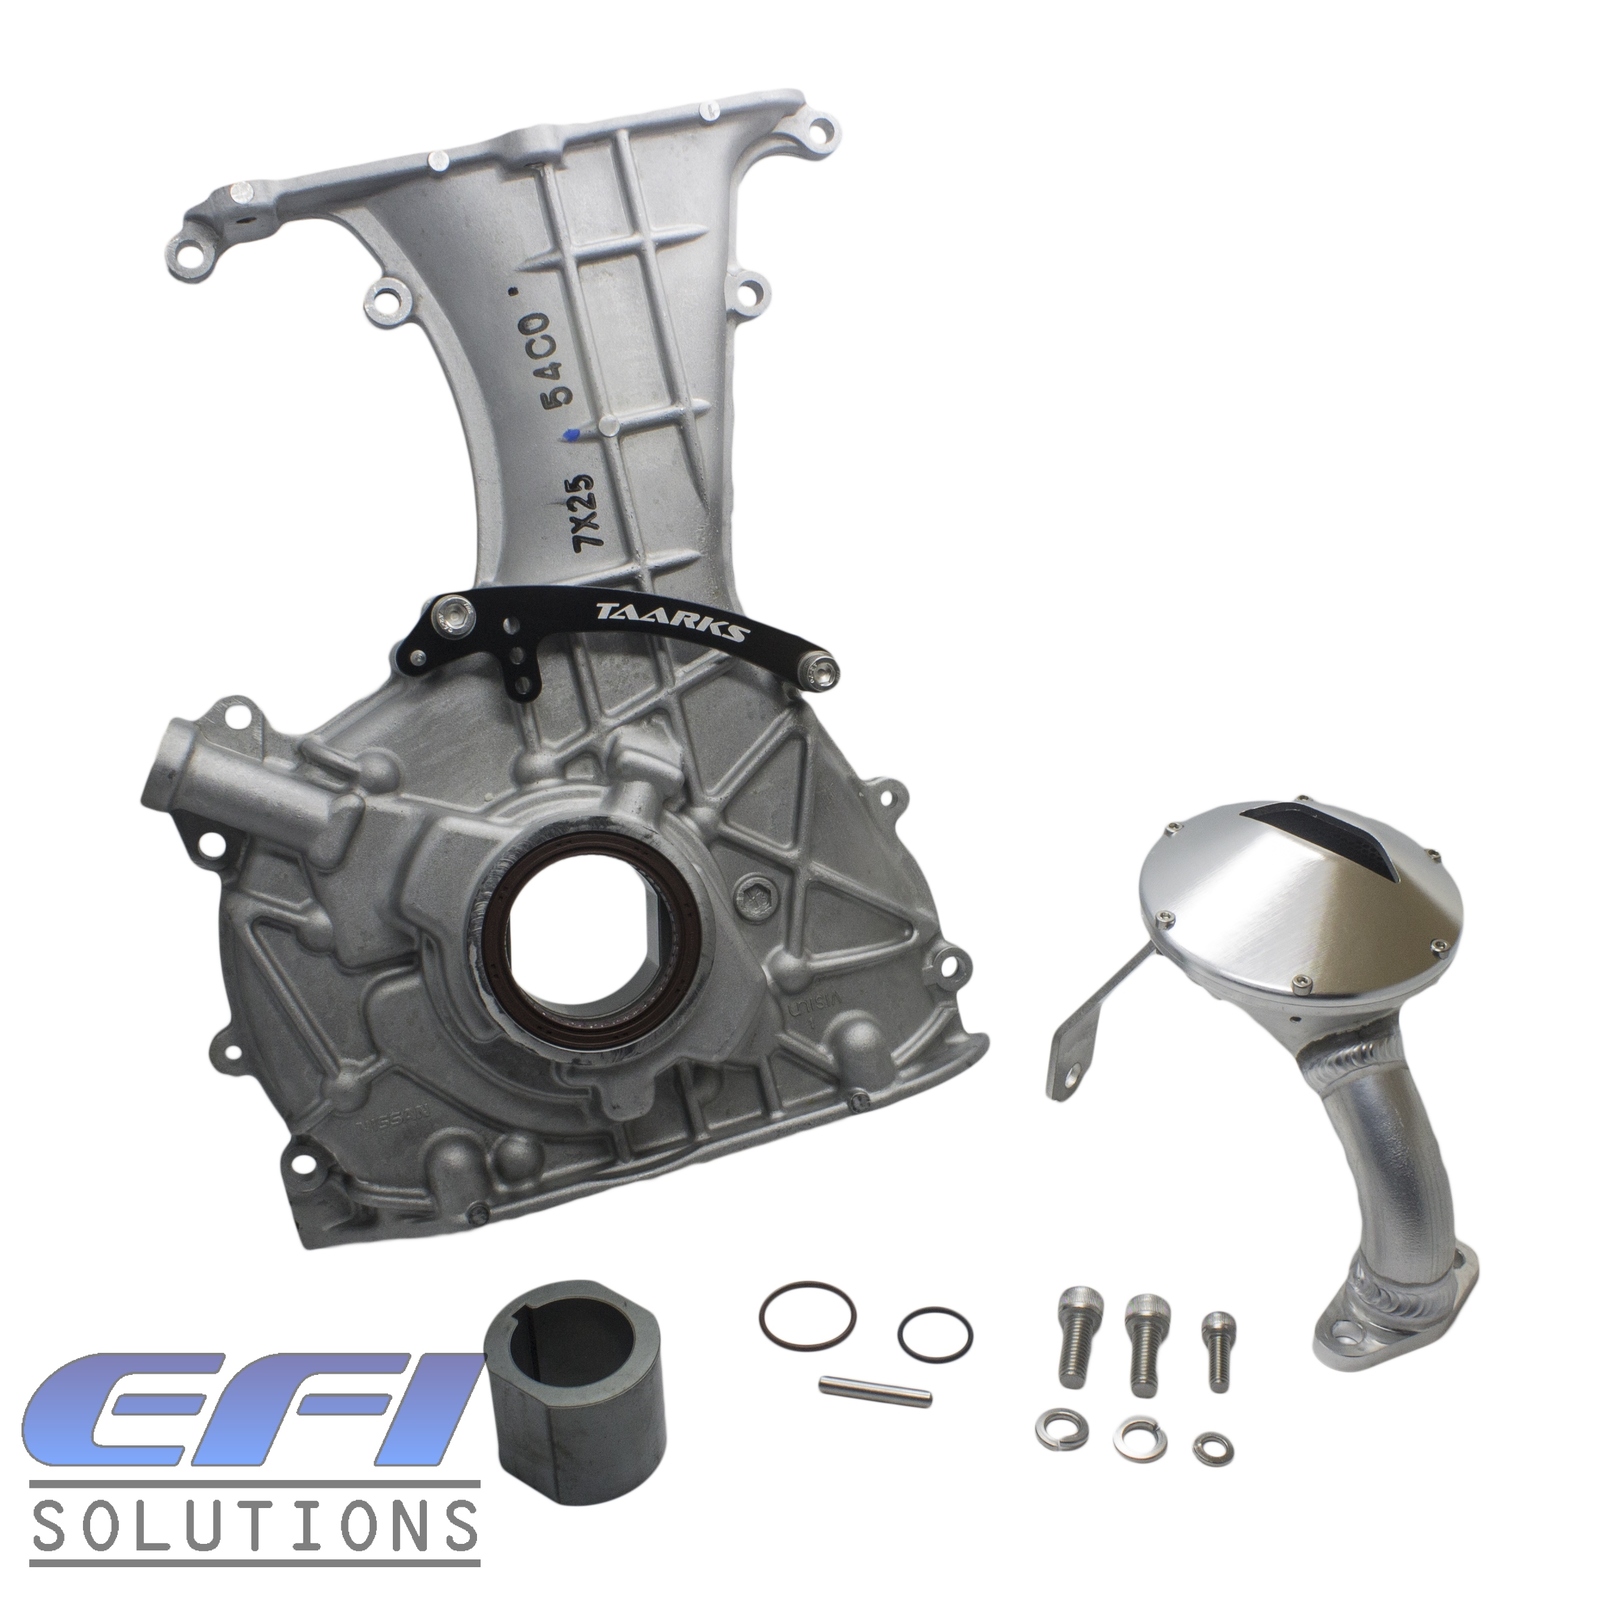 GTiR Oil Pump Conversion Kit "S13, 180sx, S14, S15" Upgrade SR20 6.5 Mechanical Injection Pump Conversion Kit